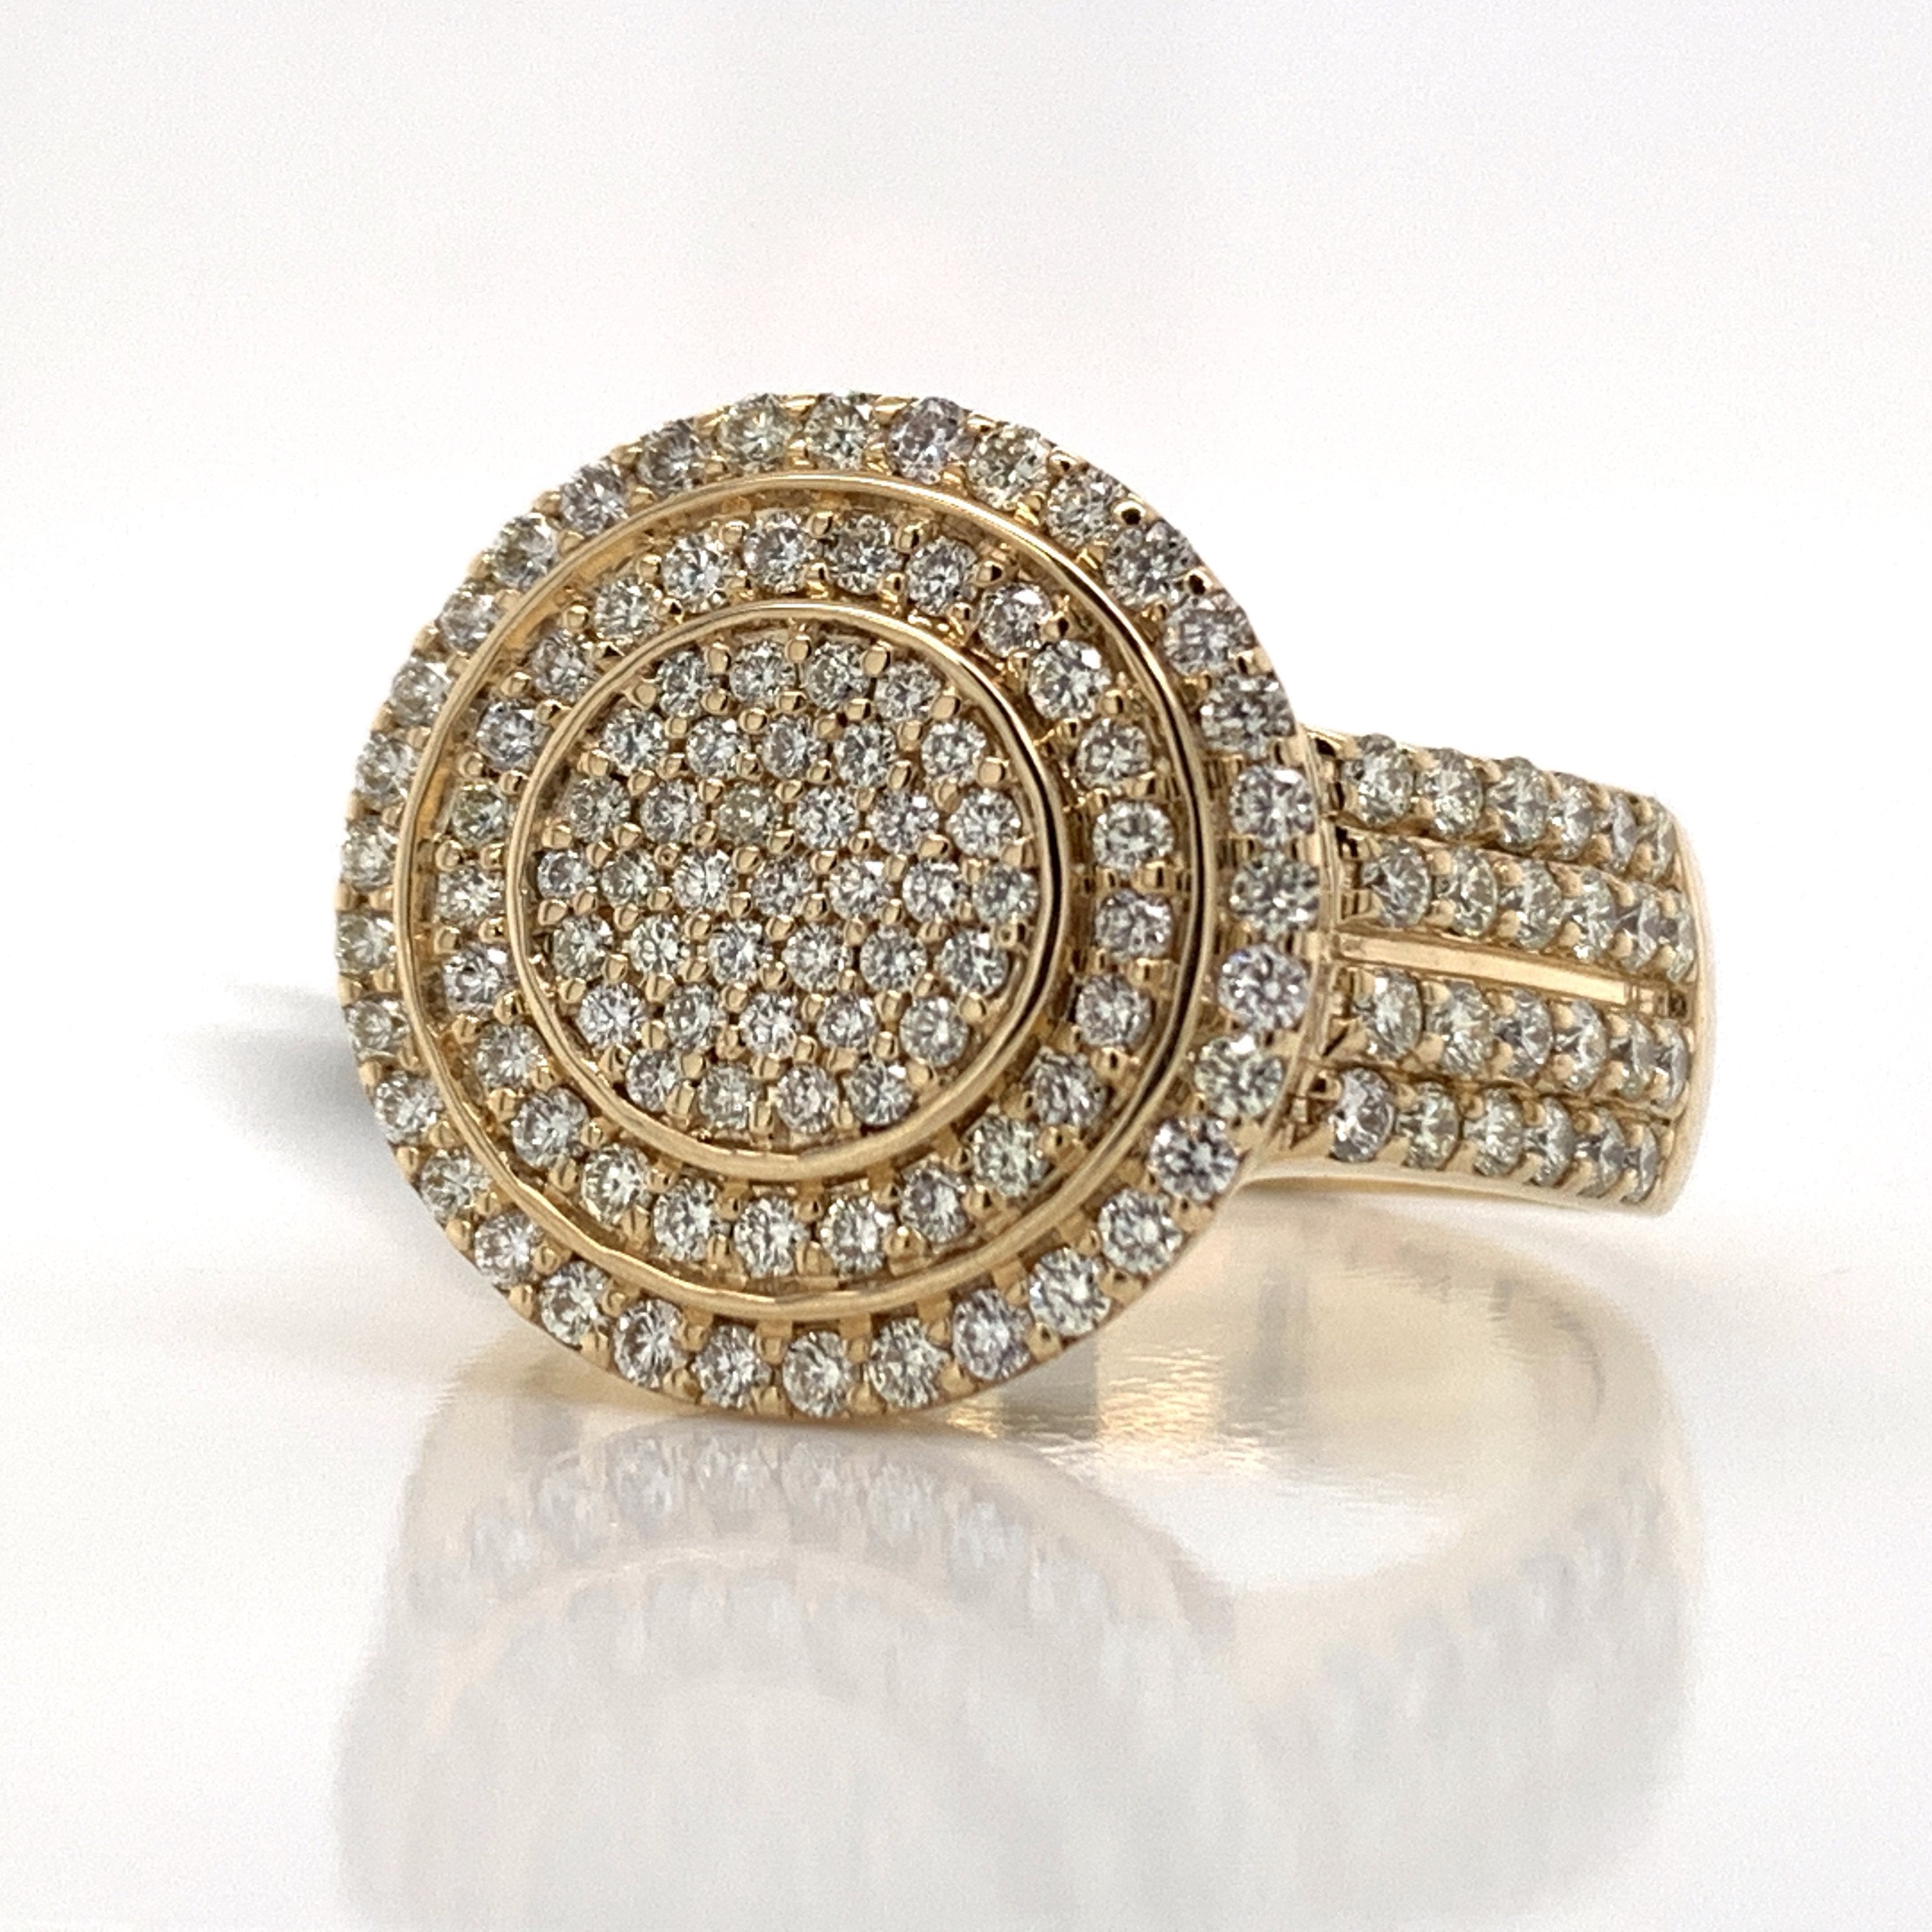 2.00 CT. Diamond Ring in 10K Gold - White Carat Diamonds 